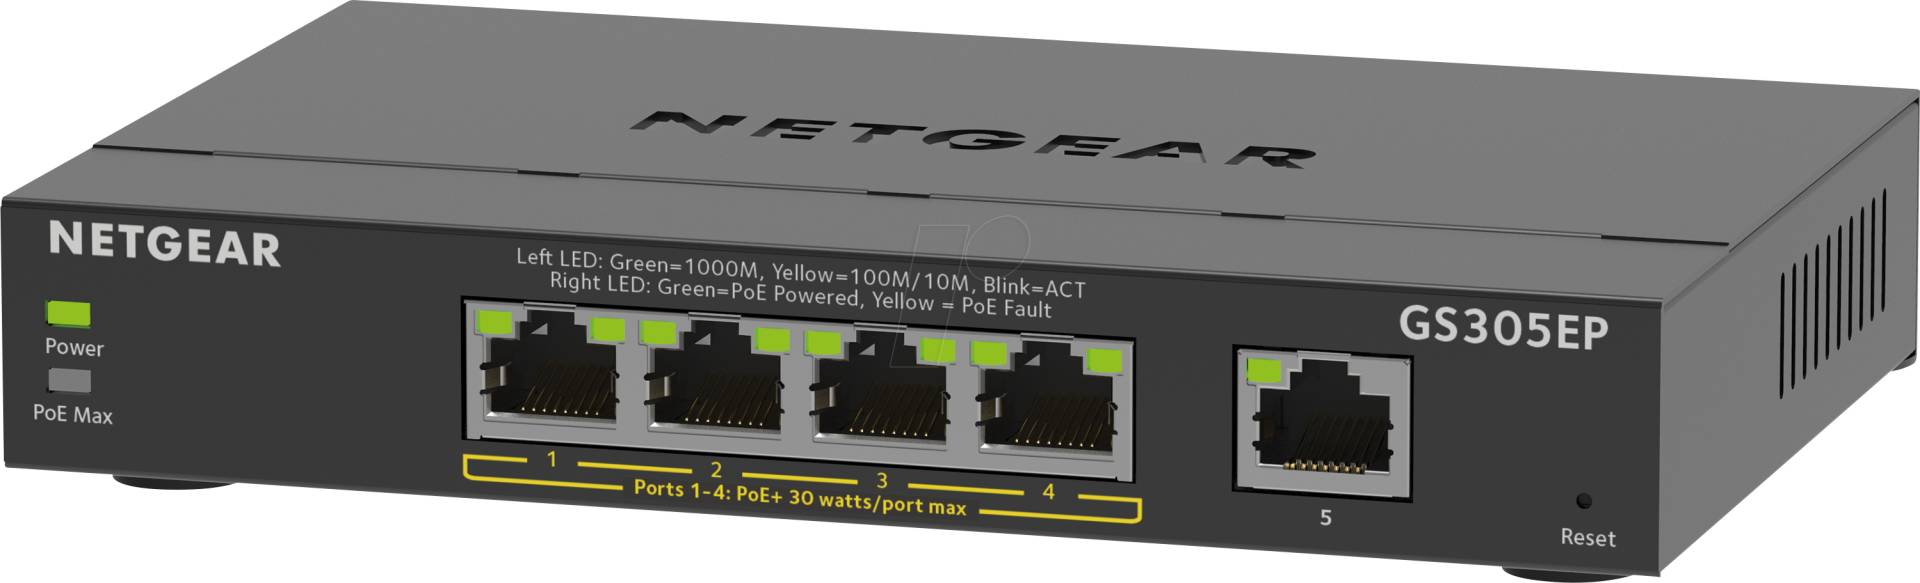 NETGEAR GS305EP - Switch, 5-Port, Gigabit Ethernet, PoE+ von Netgear